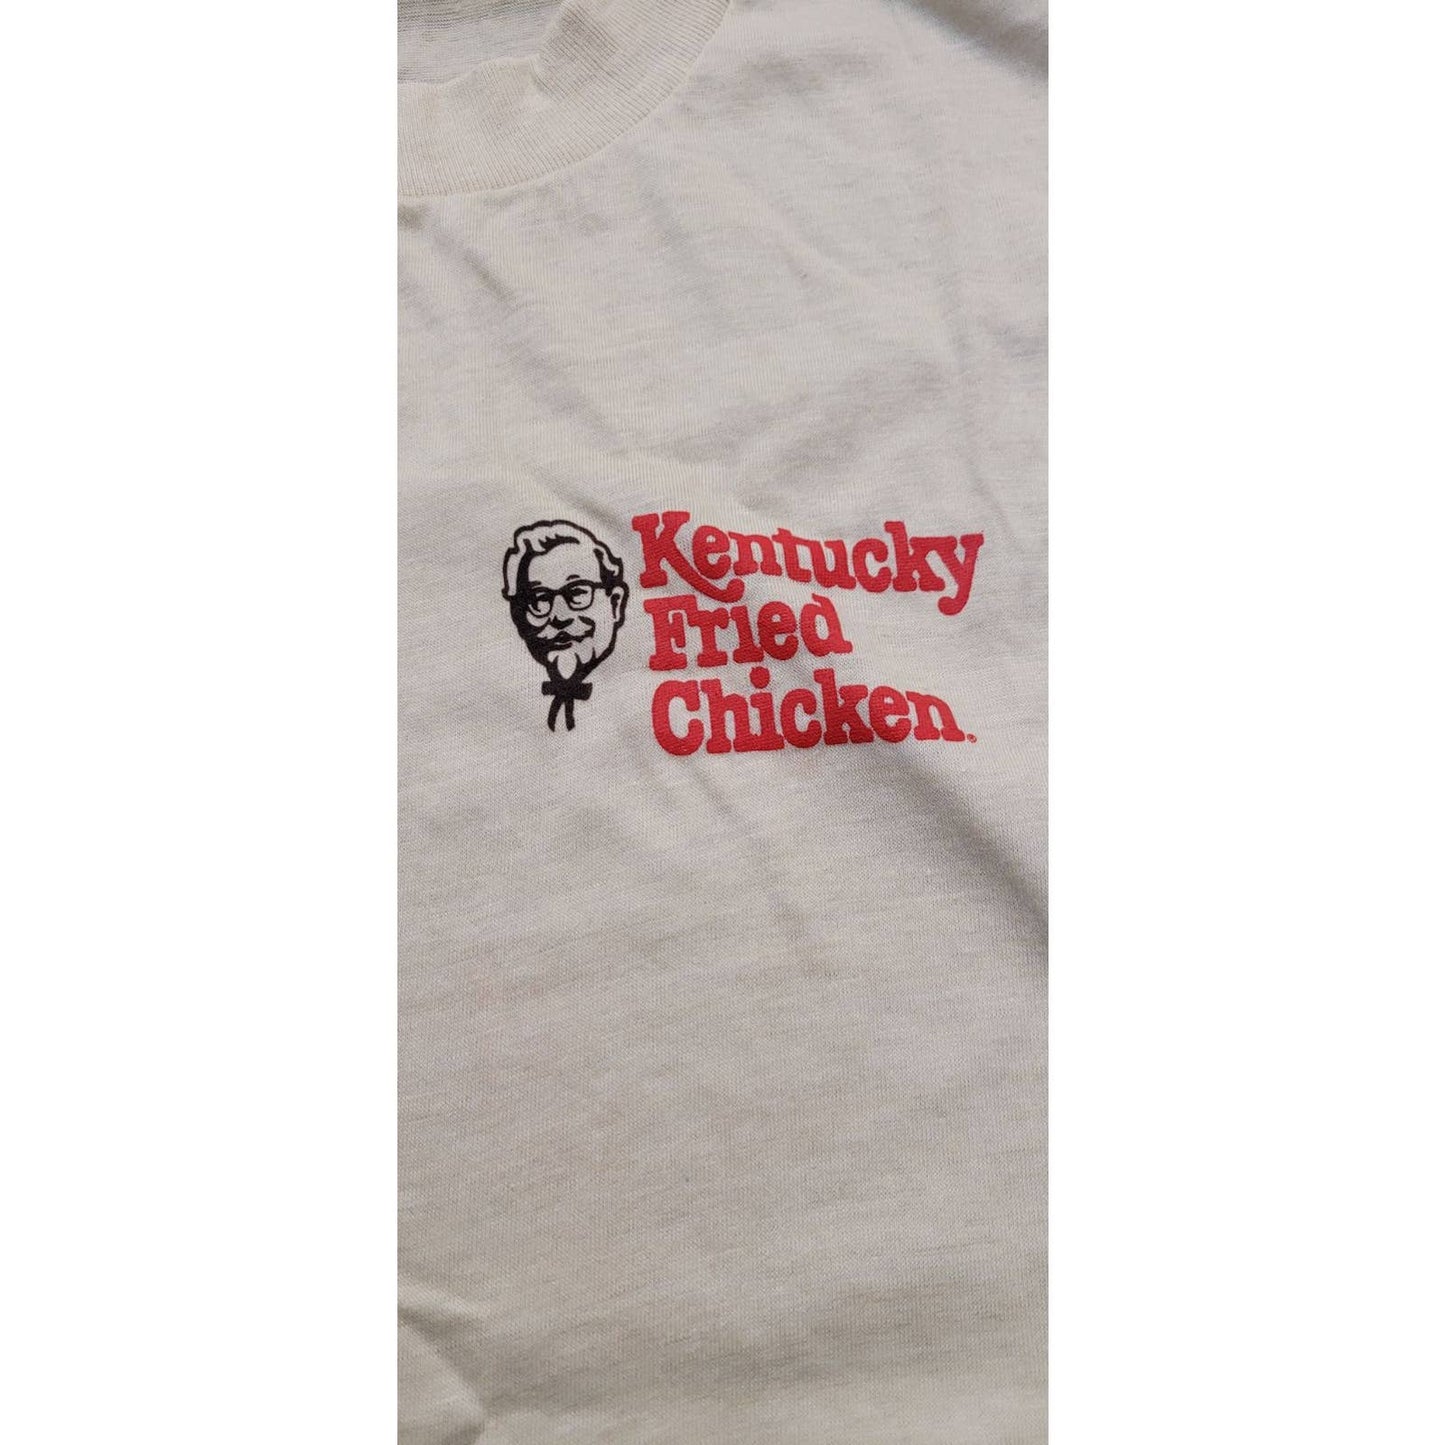 1970s KFC Uniform Shirt Never Worn